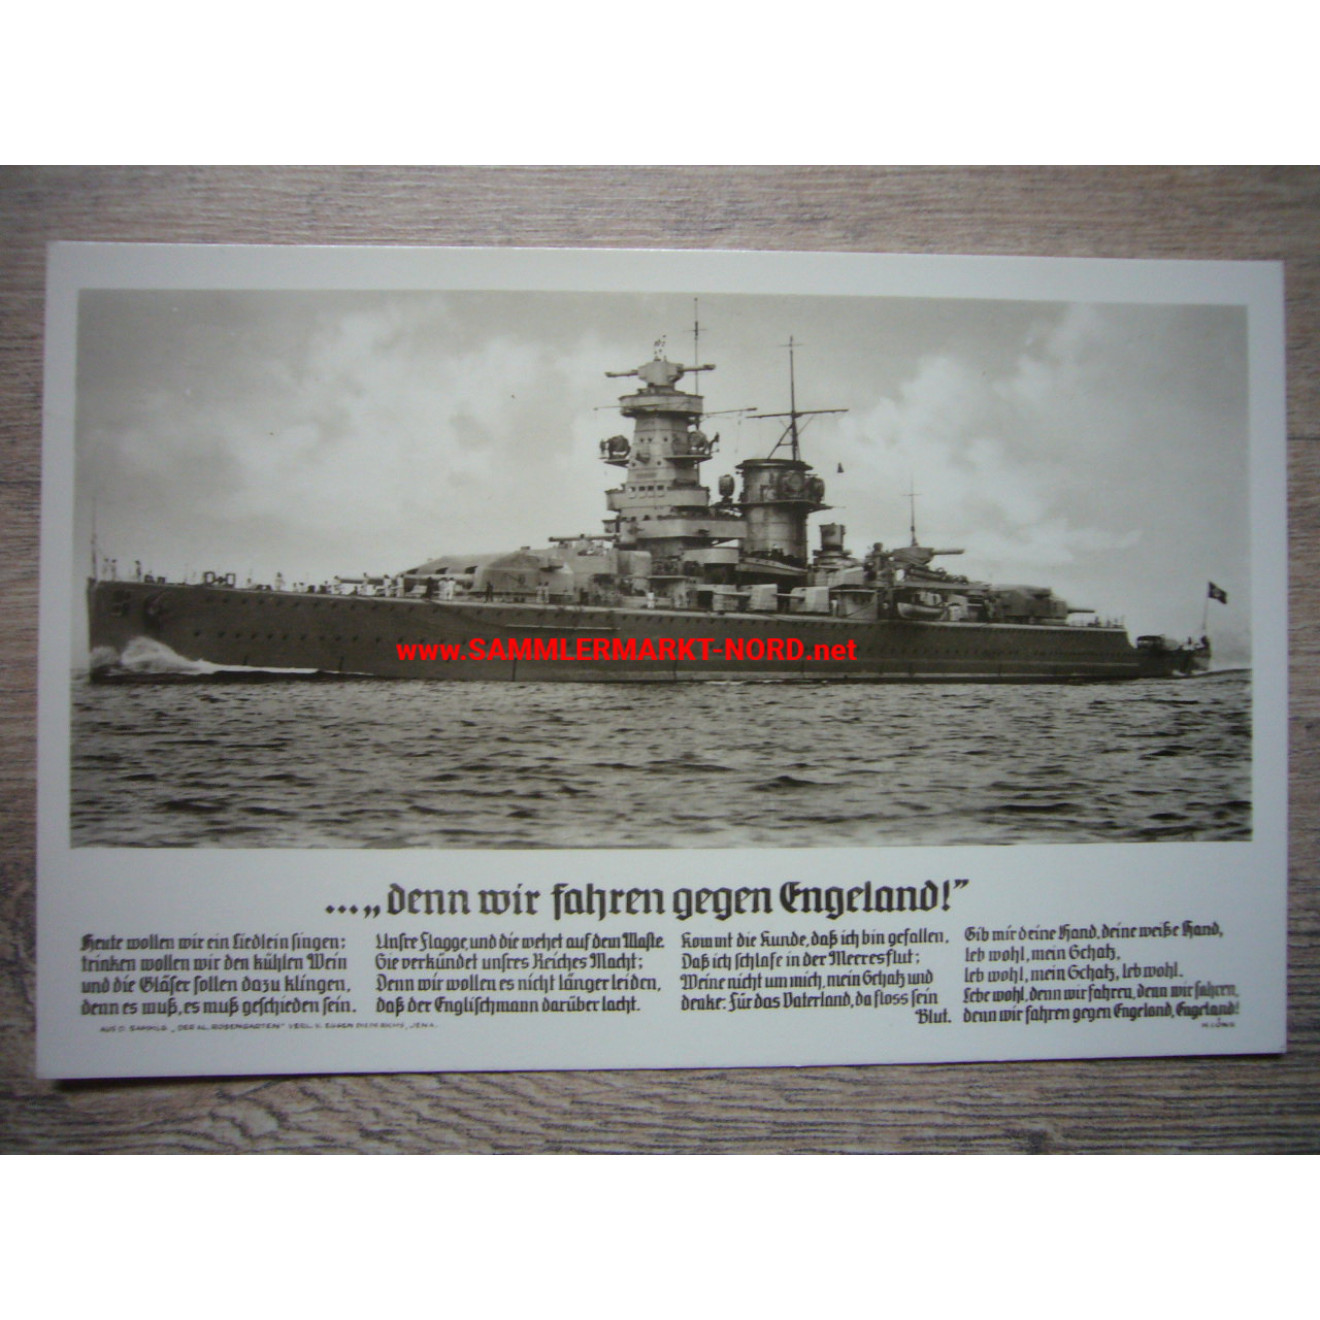 Panzerschiff Admiral Graf Spee - ... because we are heading towards Engeland! - Postcard